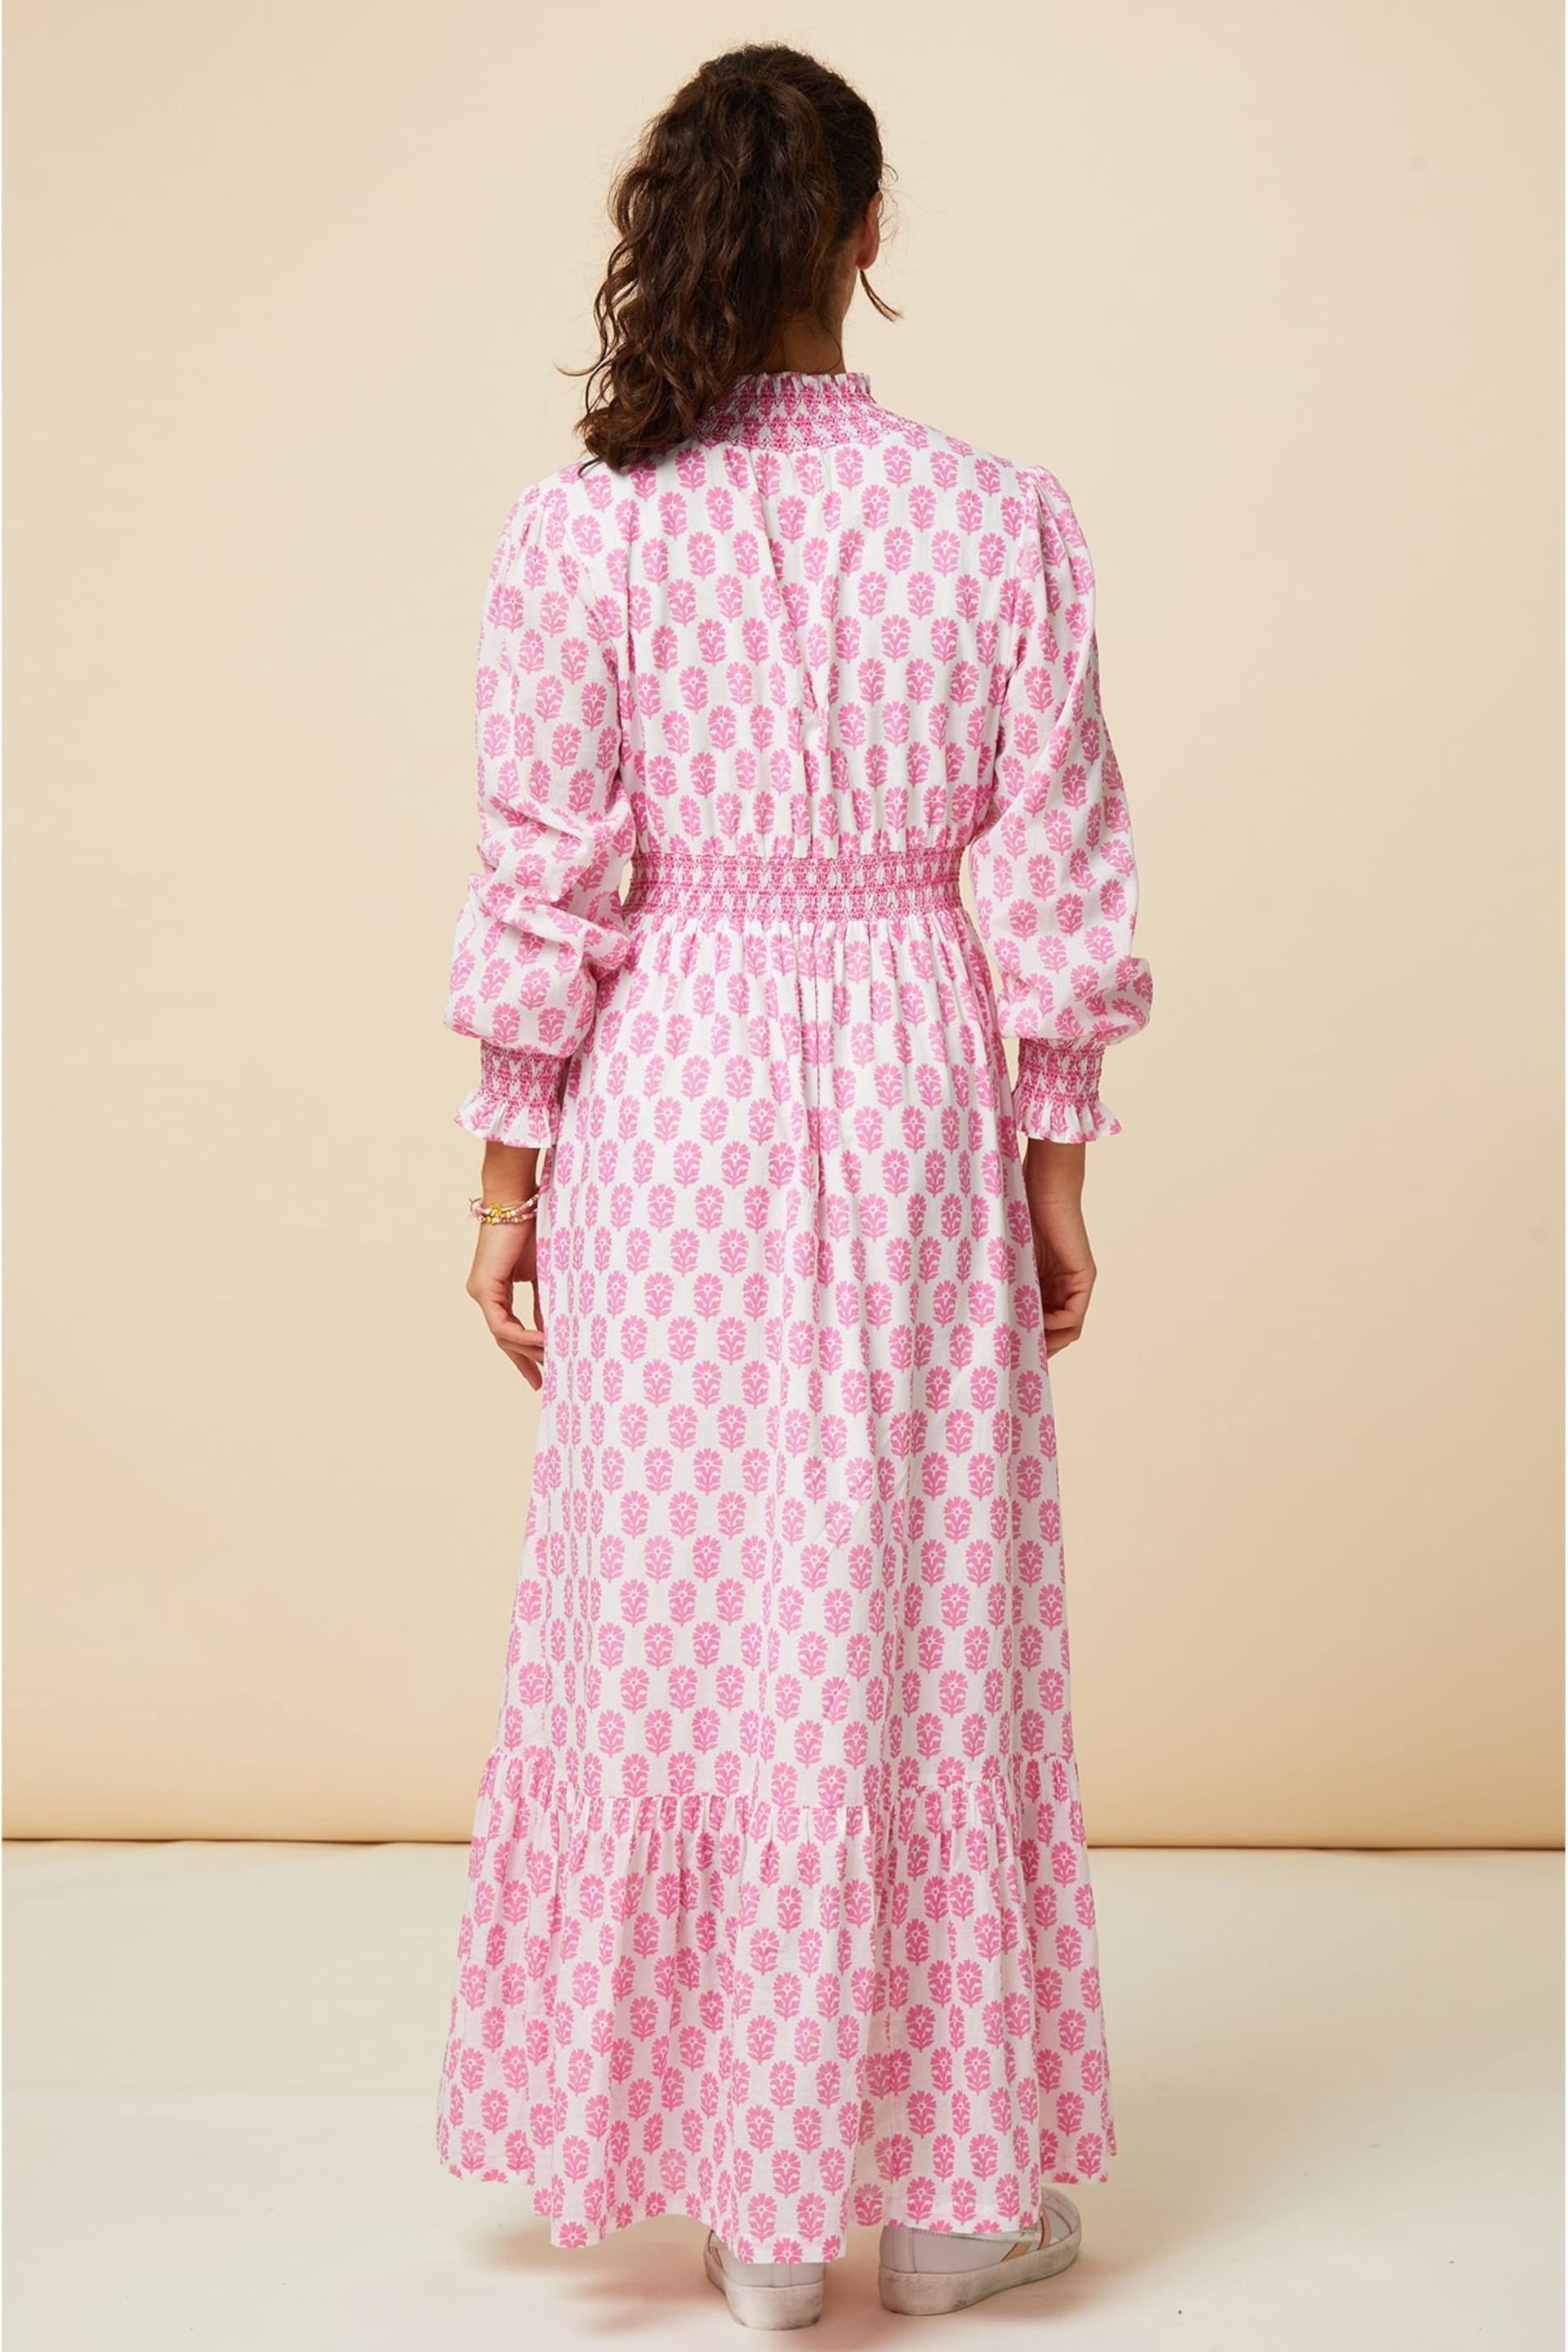 Aspiga Pink Emmeline Maxi Dress - Image 2 of 7